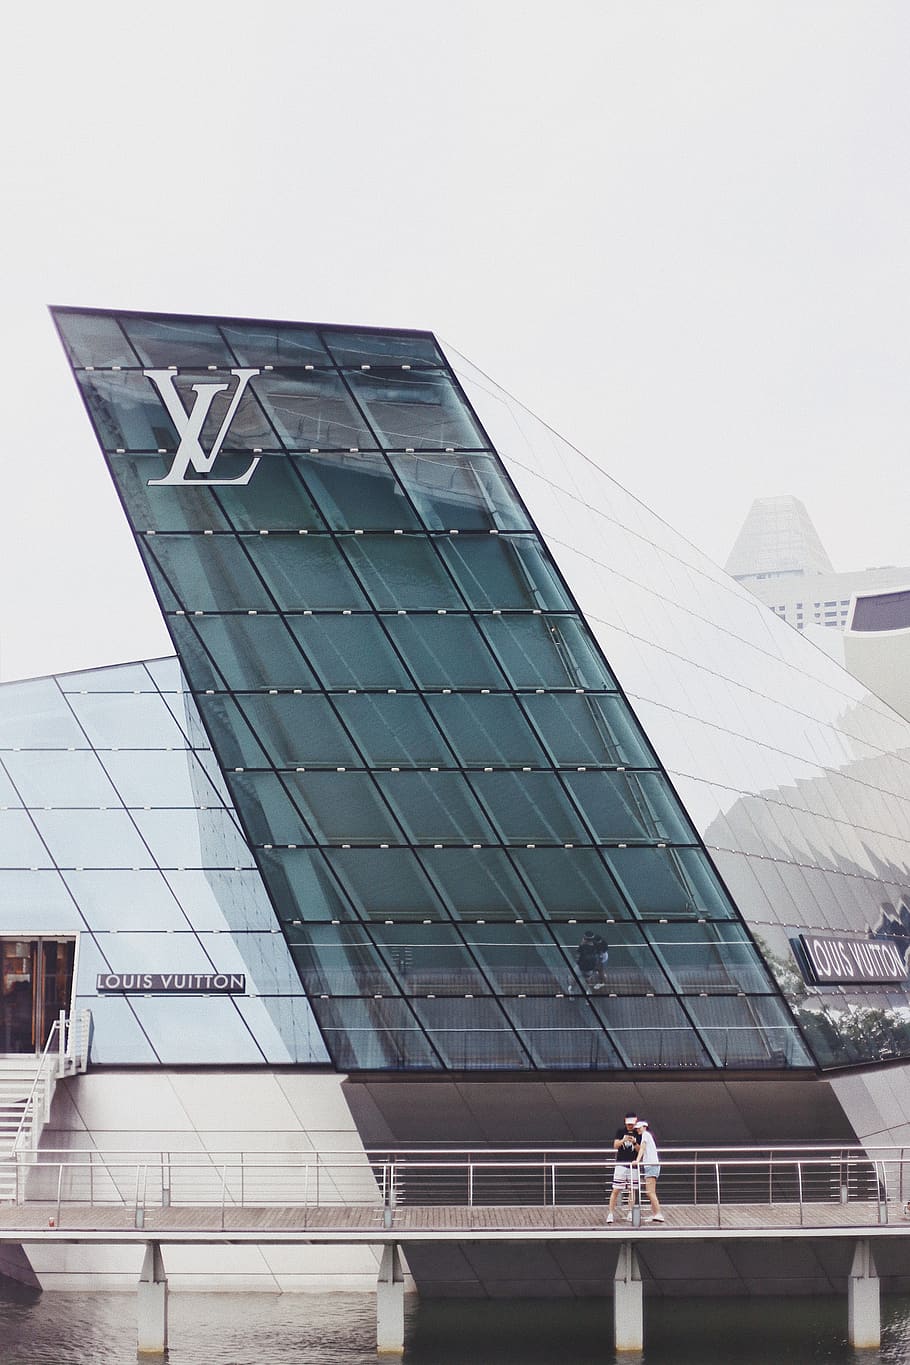 HD wallpaper: photo of Louis Vuitton building, white LV concrete building  near cars